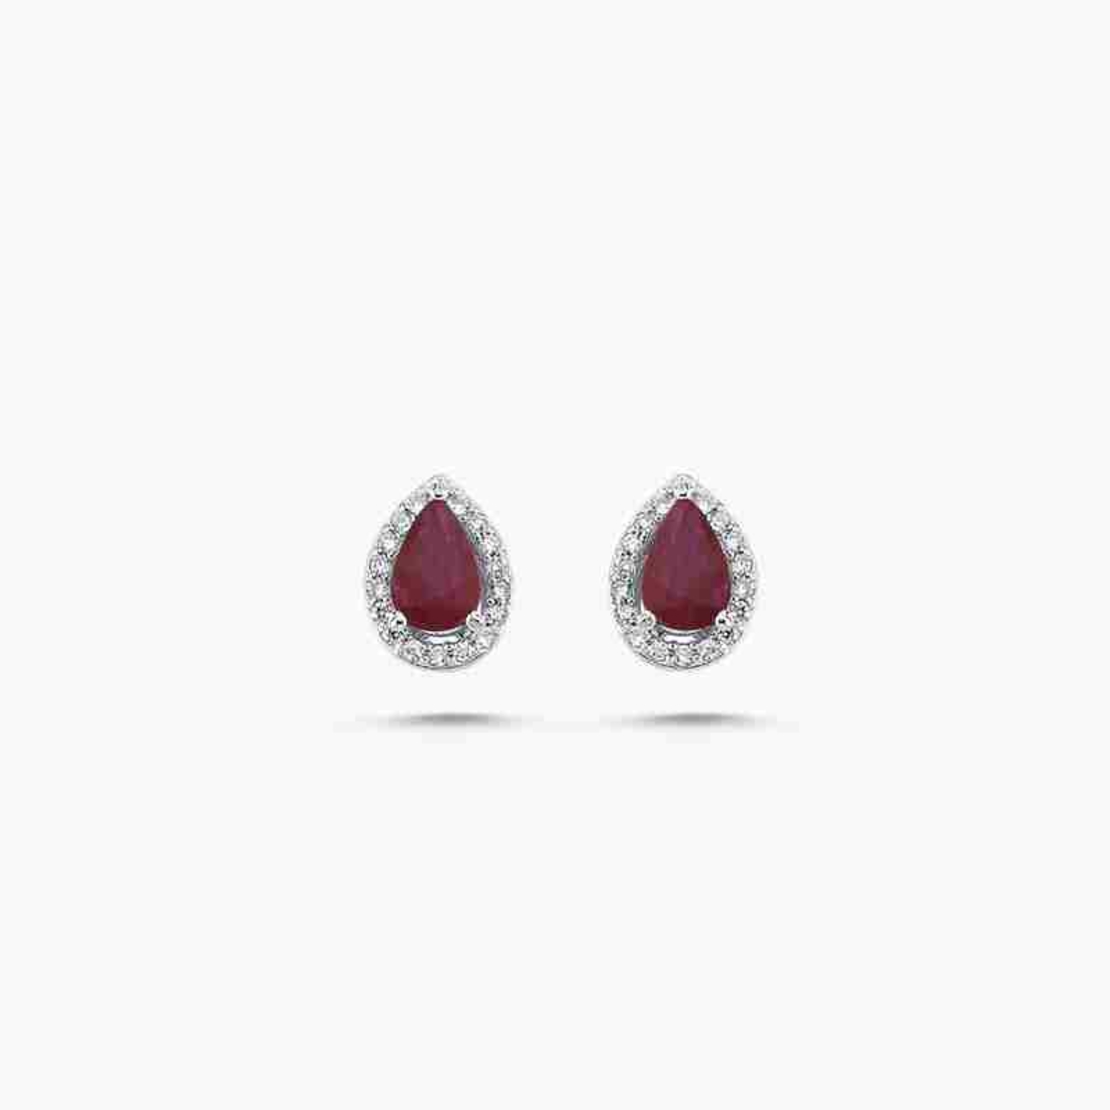 1.11 ct Earrings with rubies and diamonds